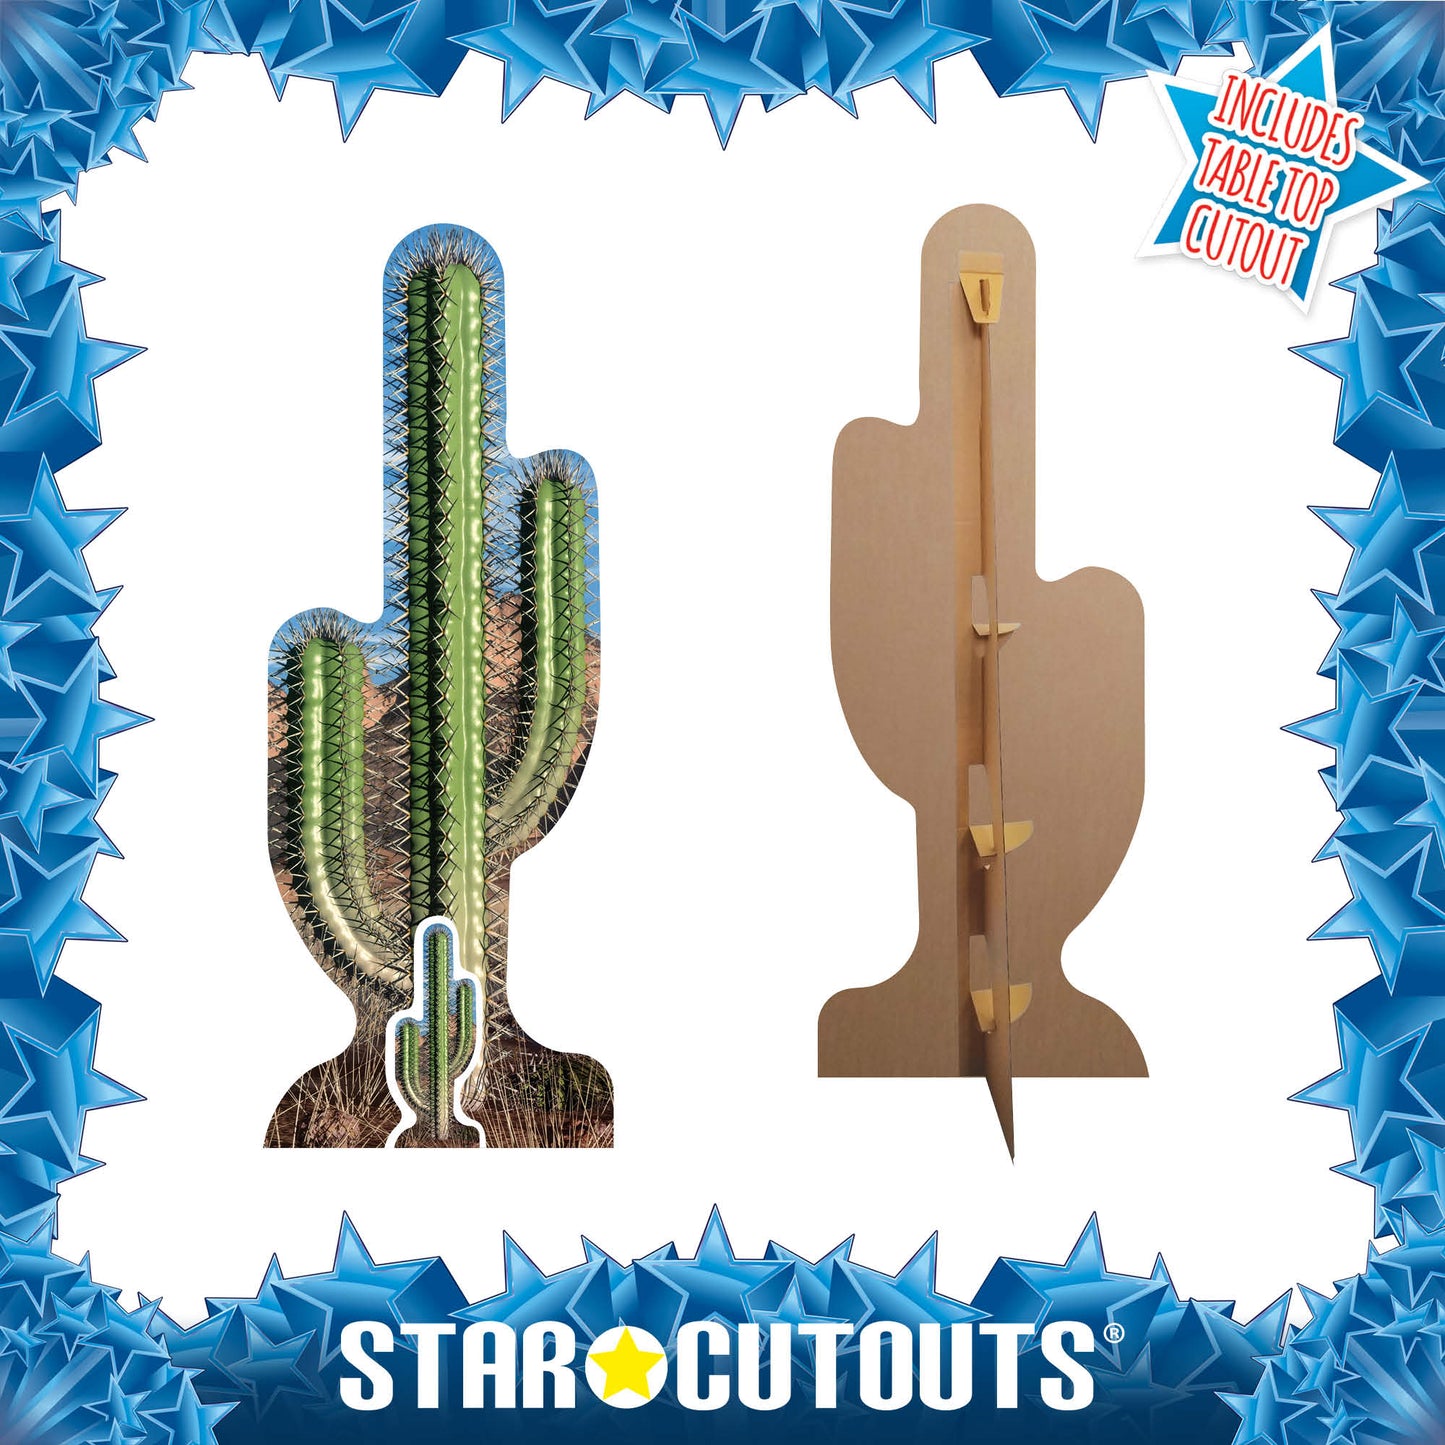 SC583 Cactus Single Cardboard Cut Out Height 183cm